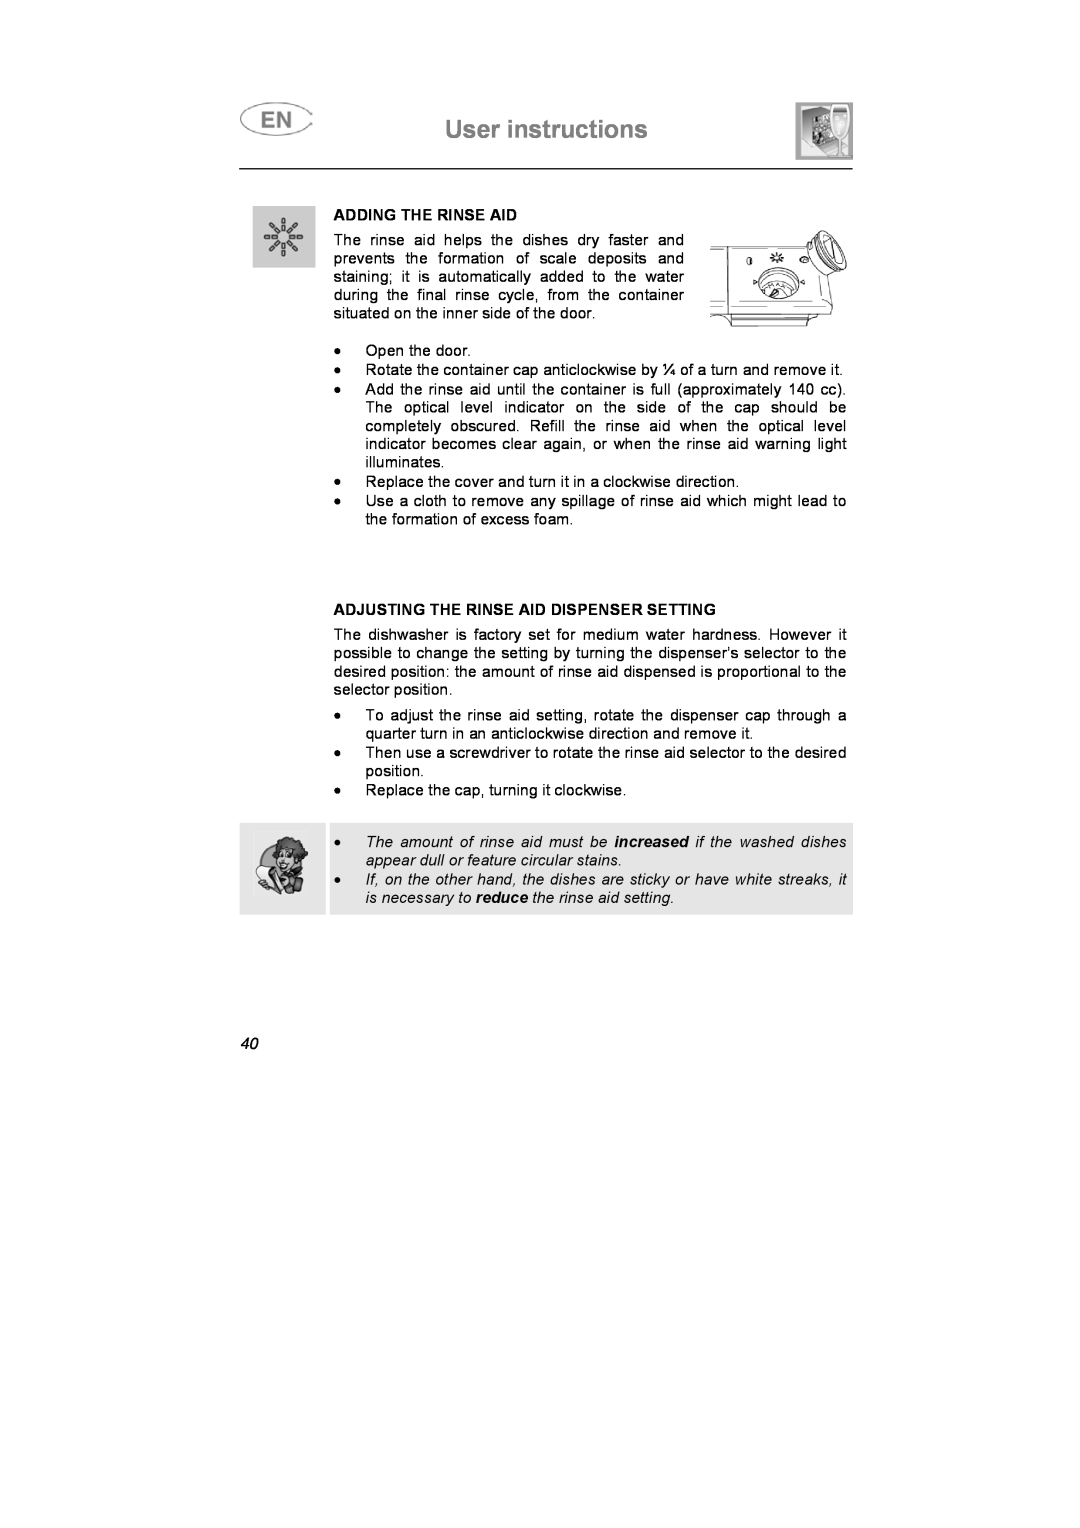 Smeg LSA653E instruction manual User instructions, Adding The Rinse Aid, Adjusting The Rinse Aid Dispenser Setting 